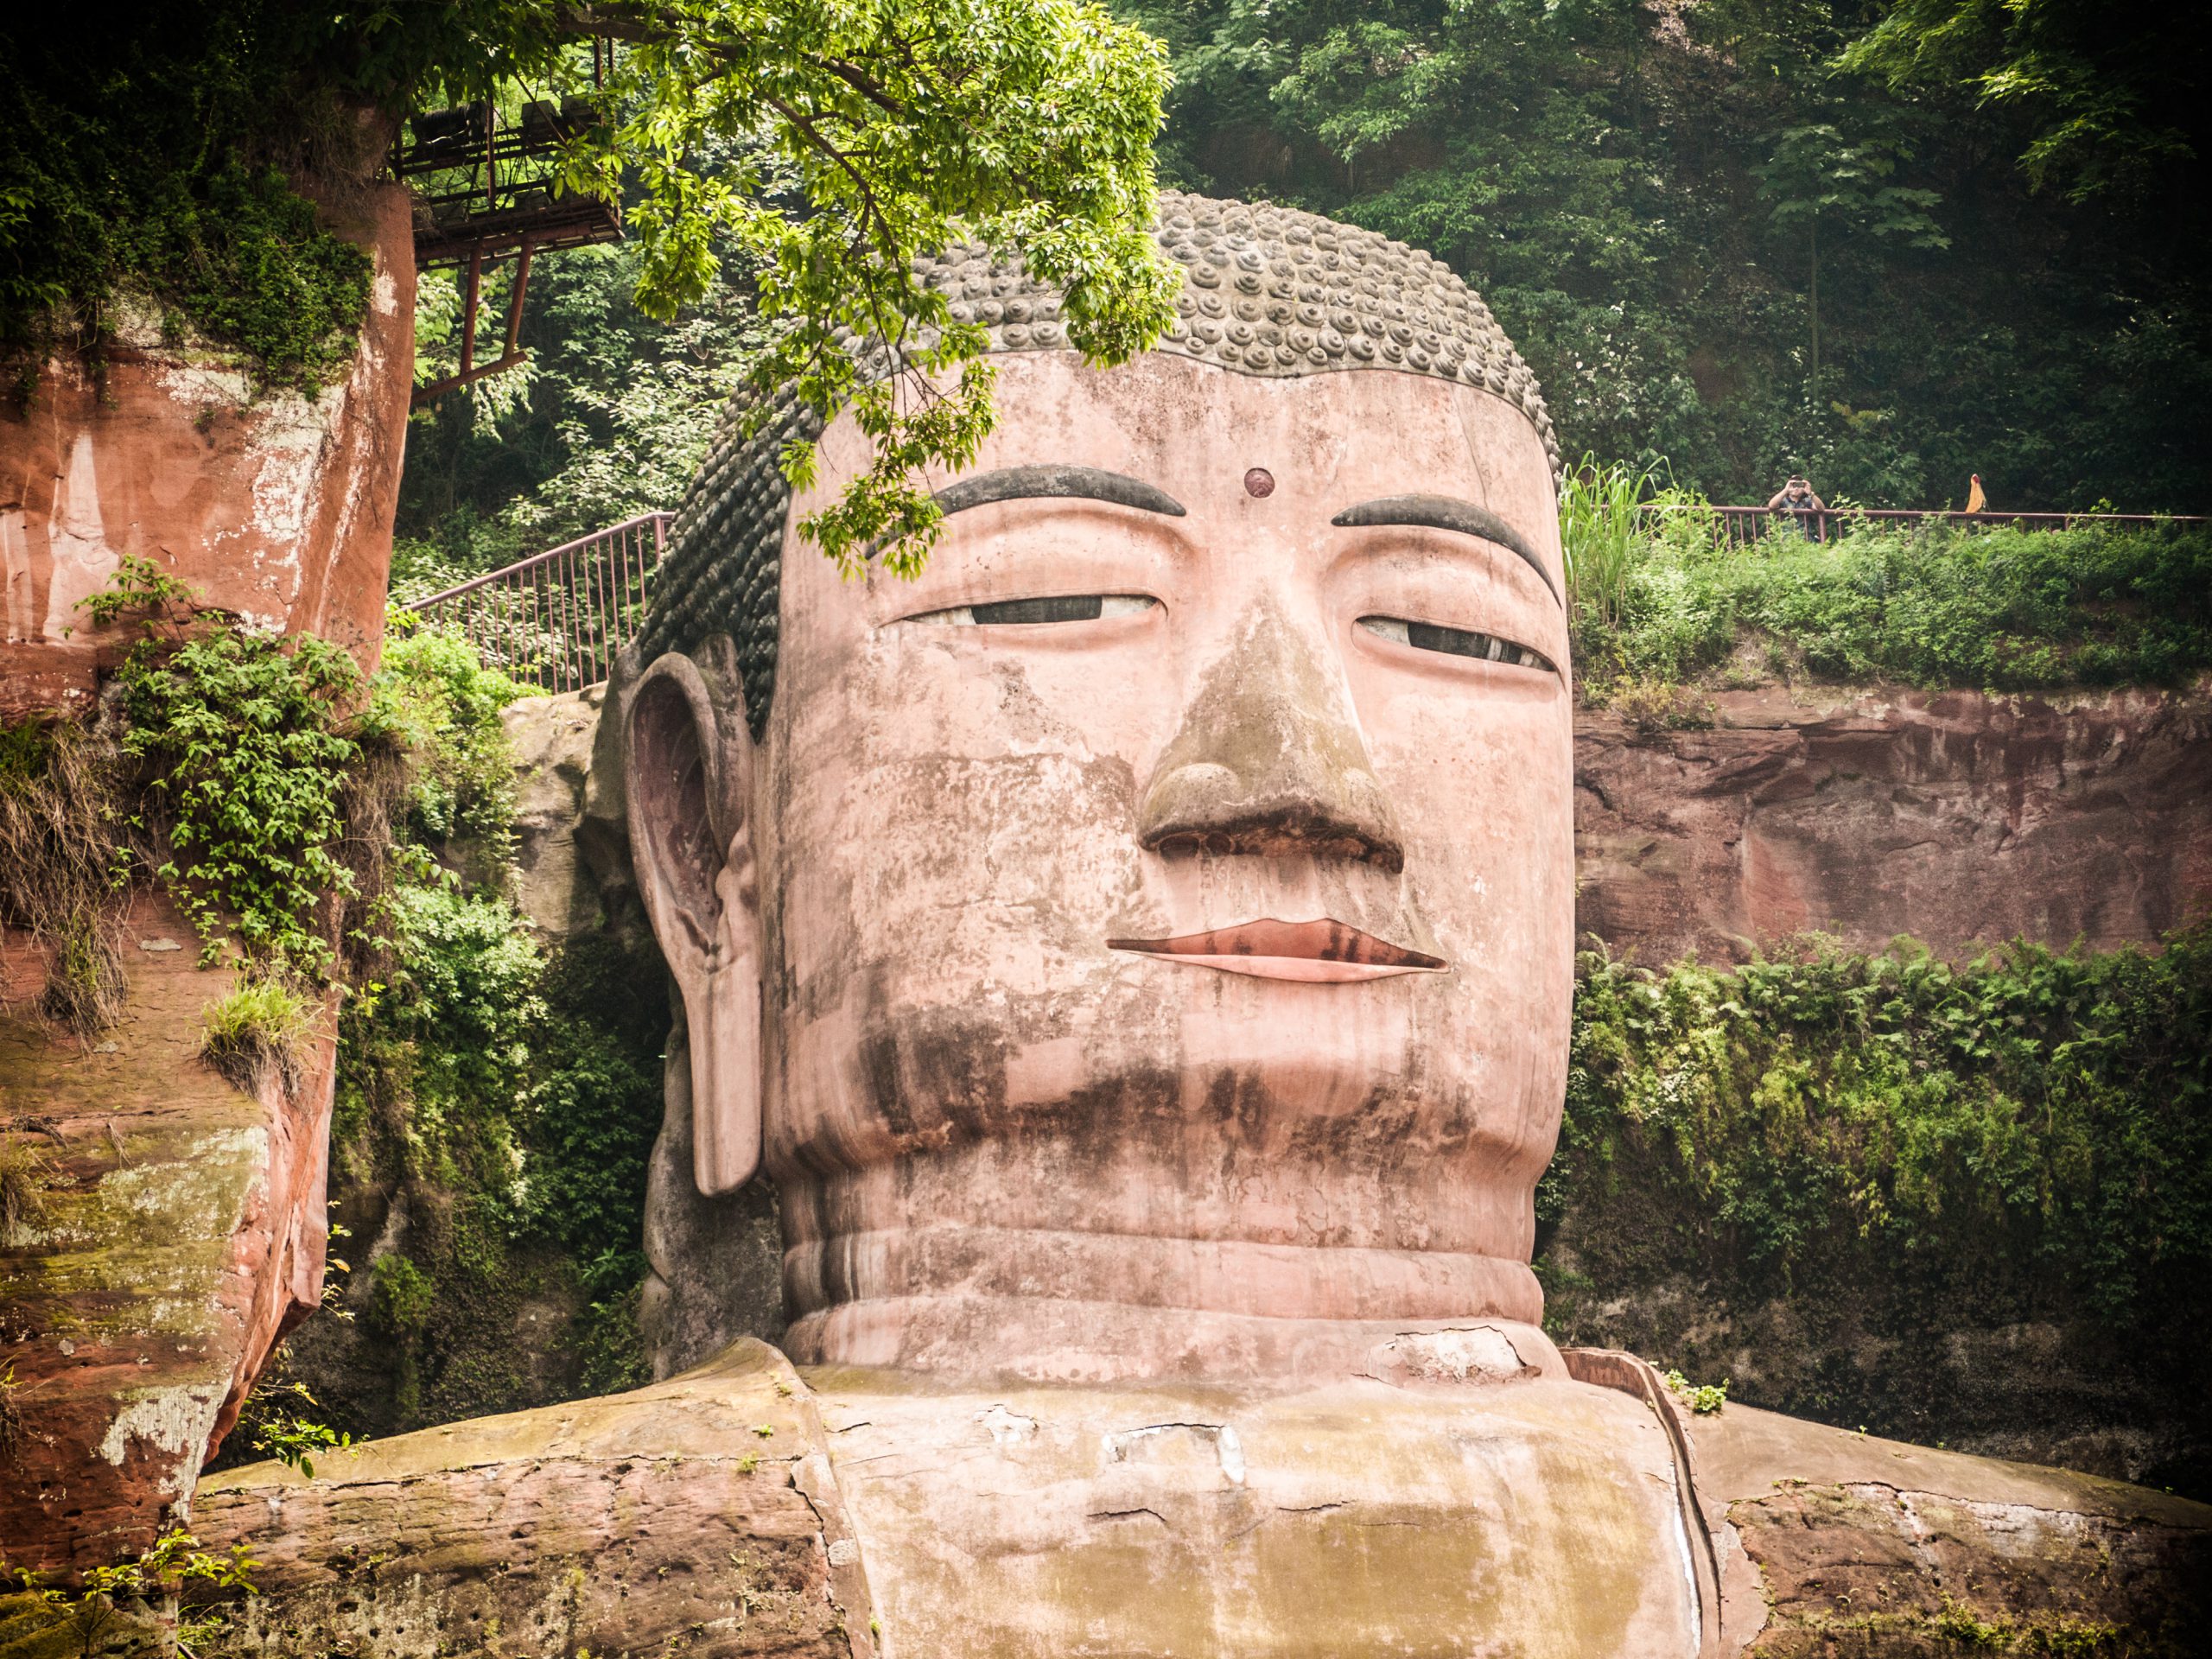 The Giant Buddha’s Smile